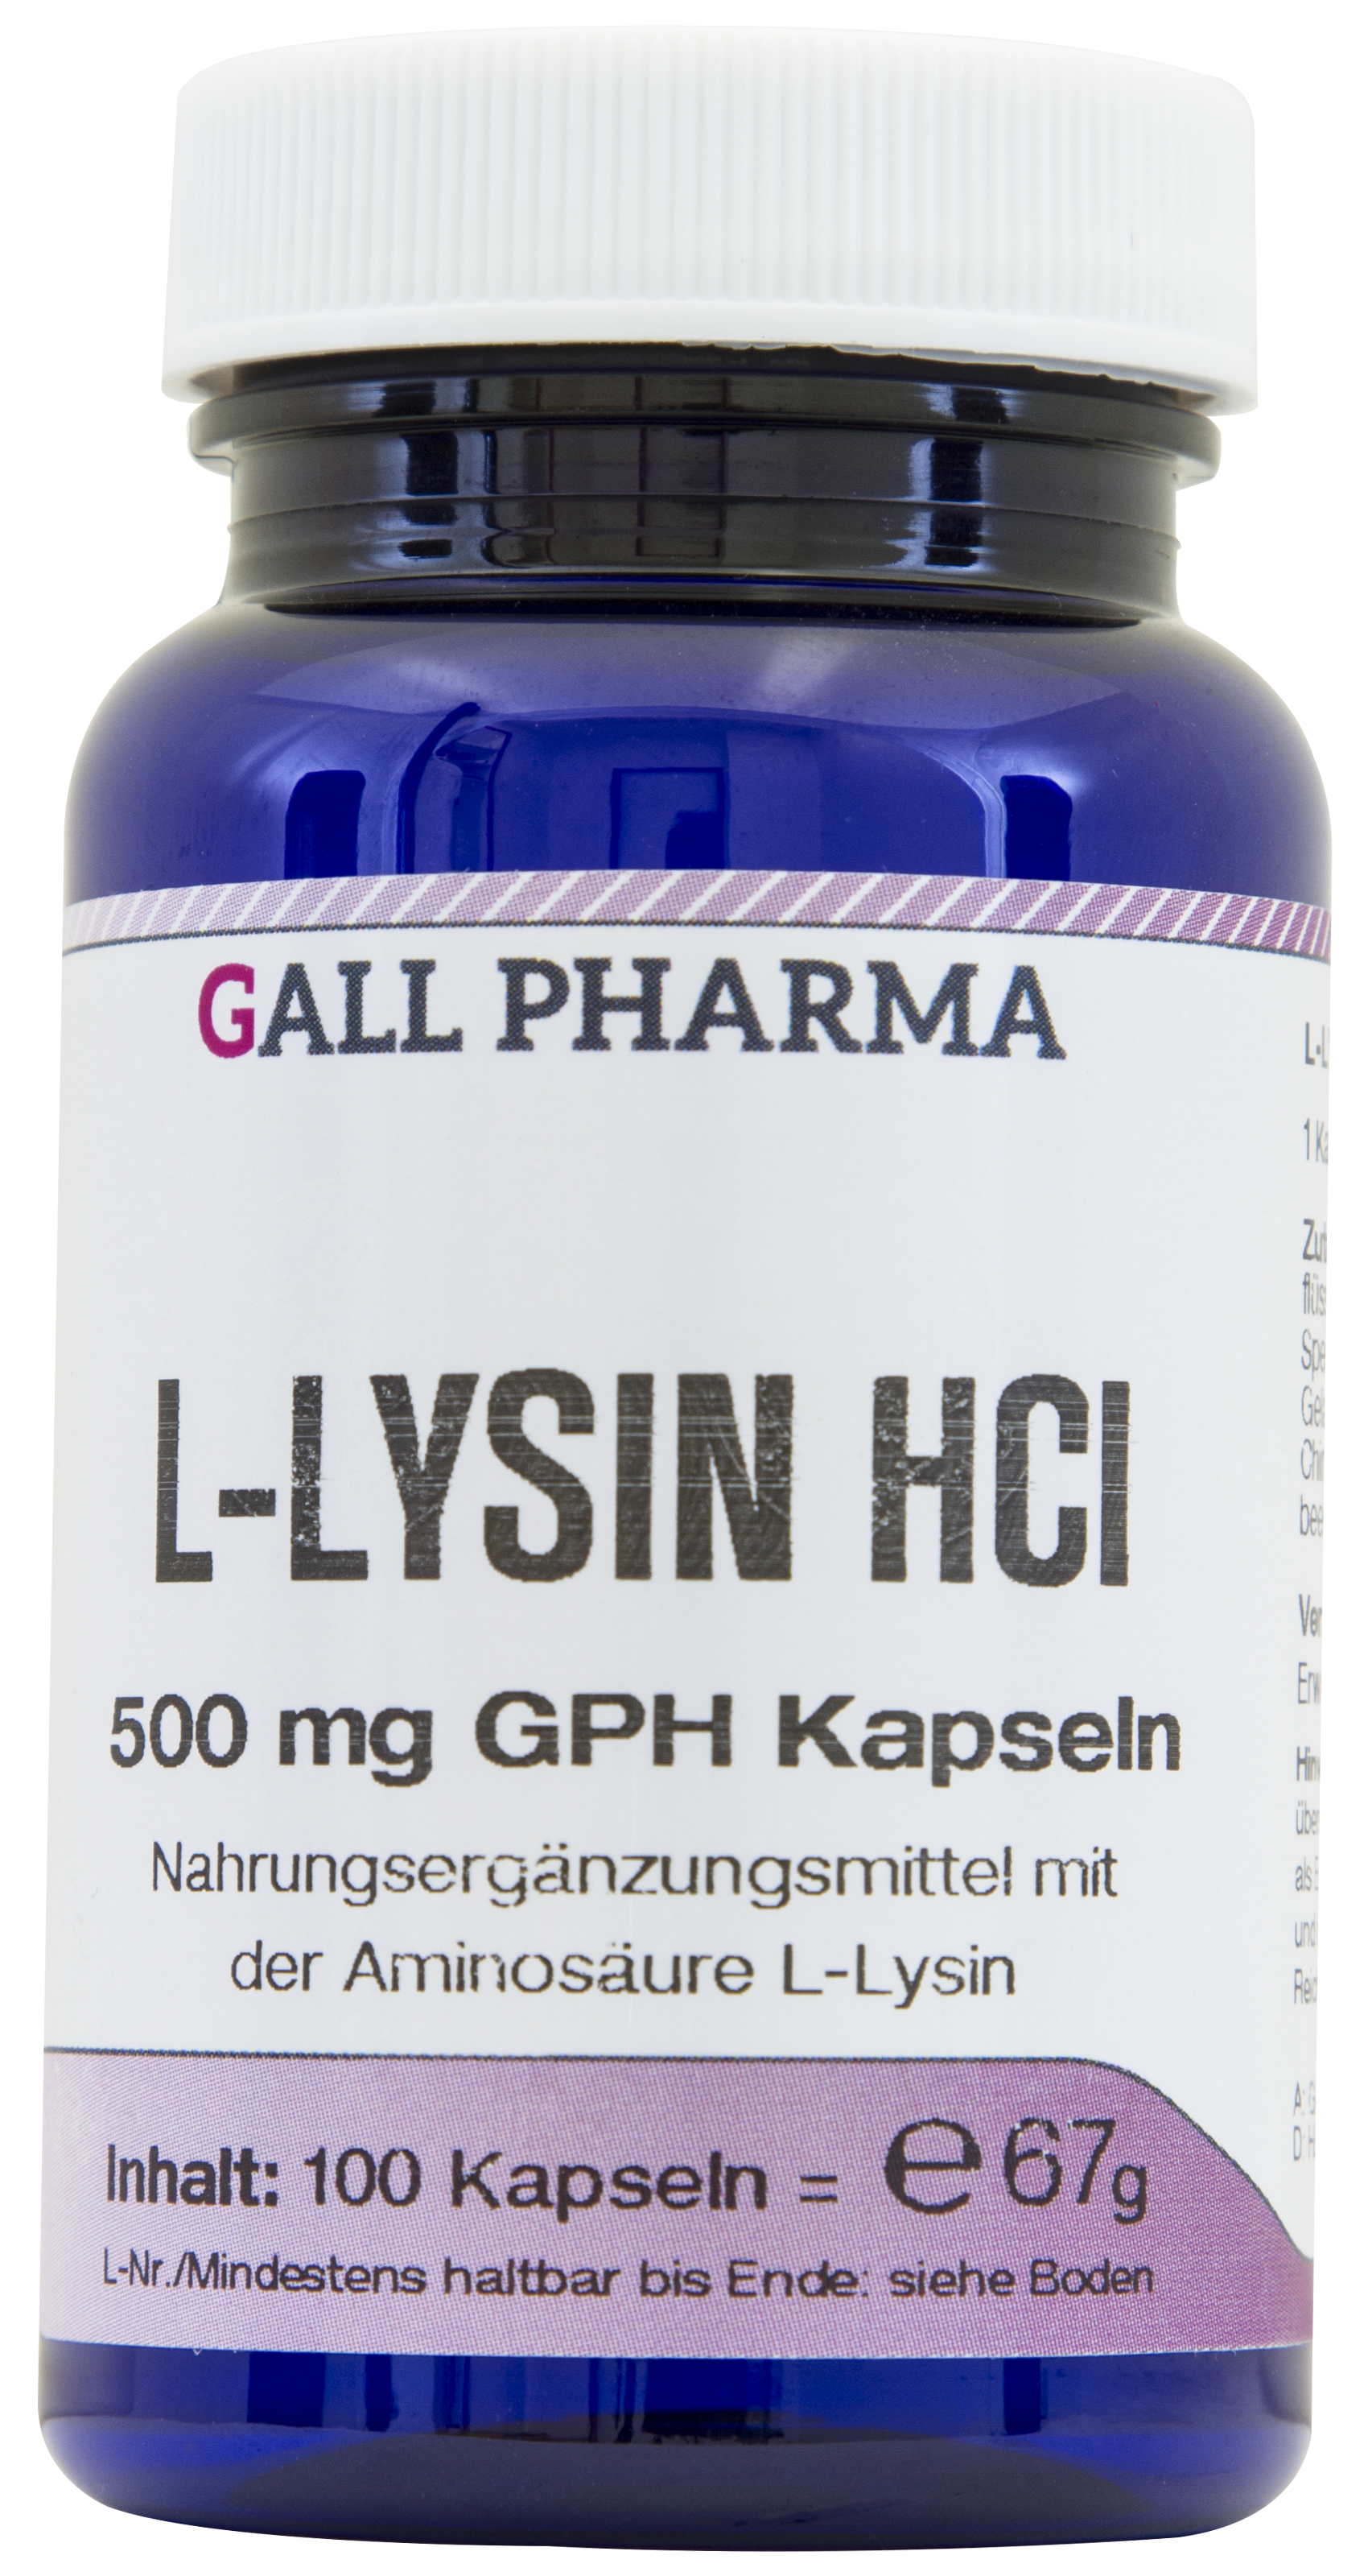 Lysin HCl 500 mg GPH Kapseln